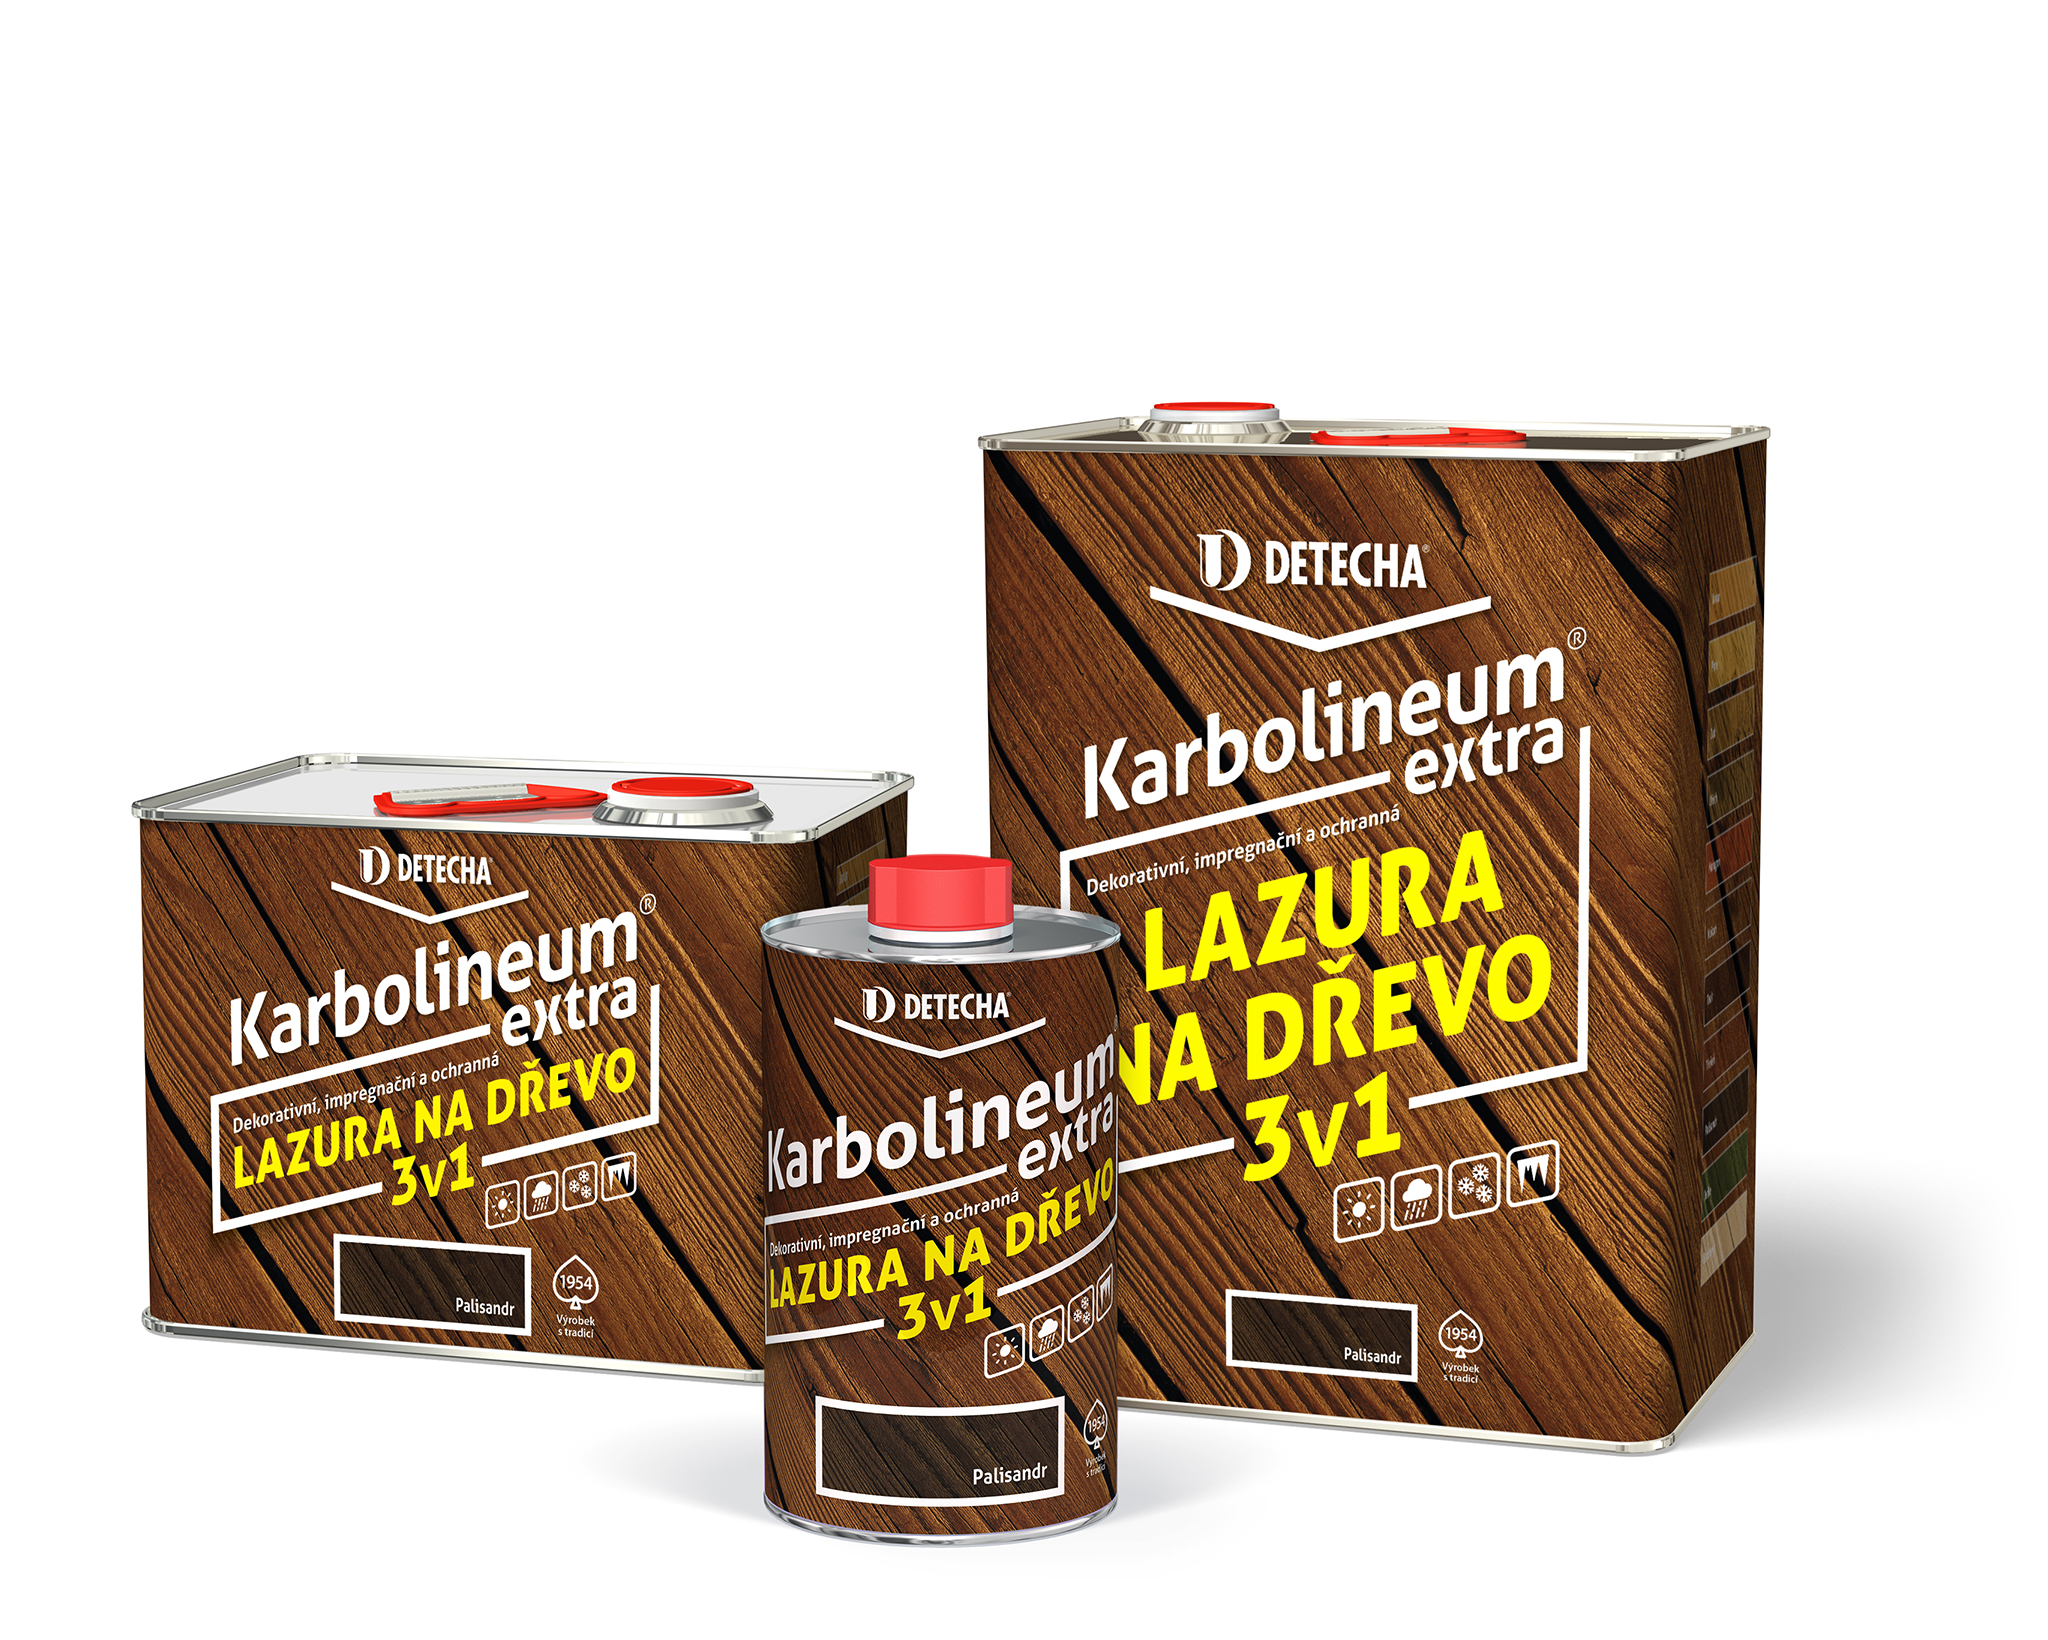 Detecha Karbolineum extra lazura na dřevo 3v1 8kg